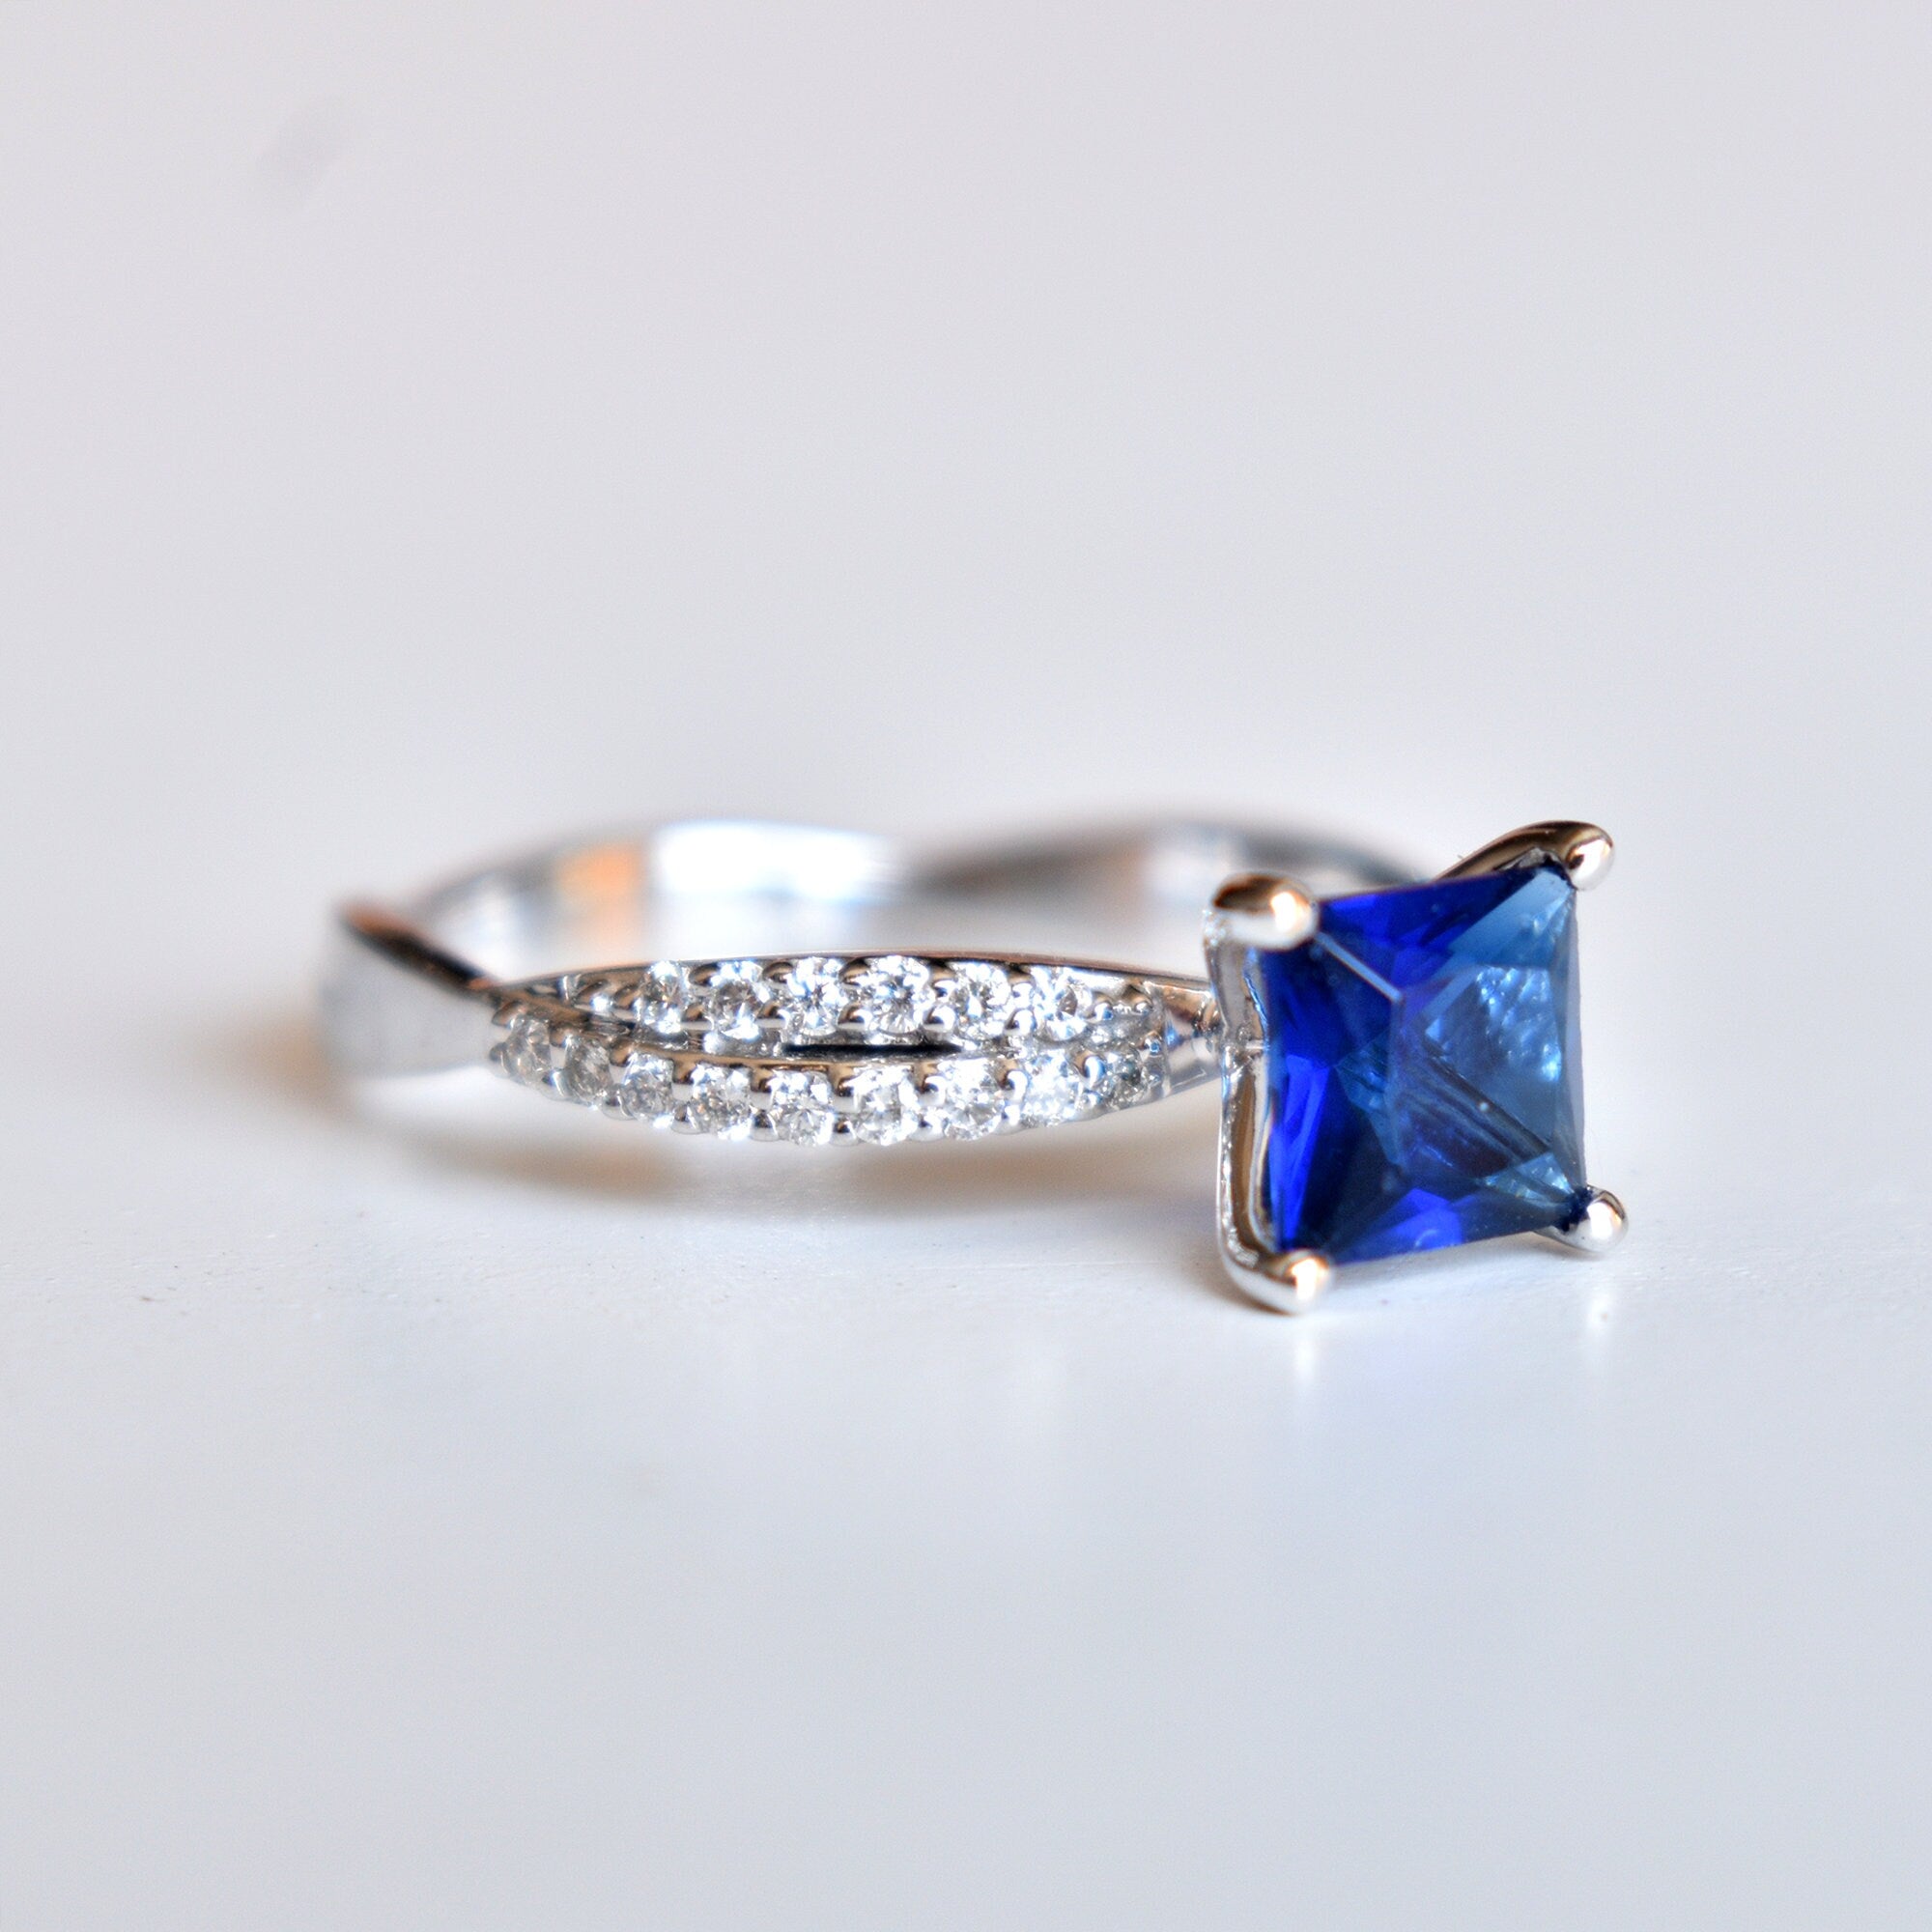 14K/18K Gold Pear Shaped Moonstone Diamond Halo Engagement Ring Set